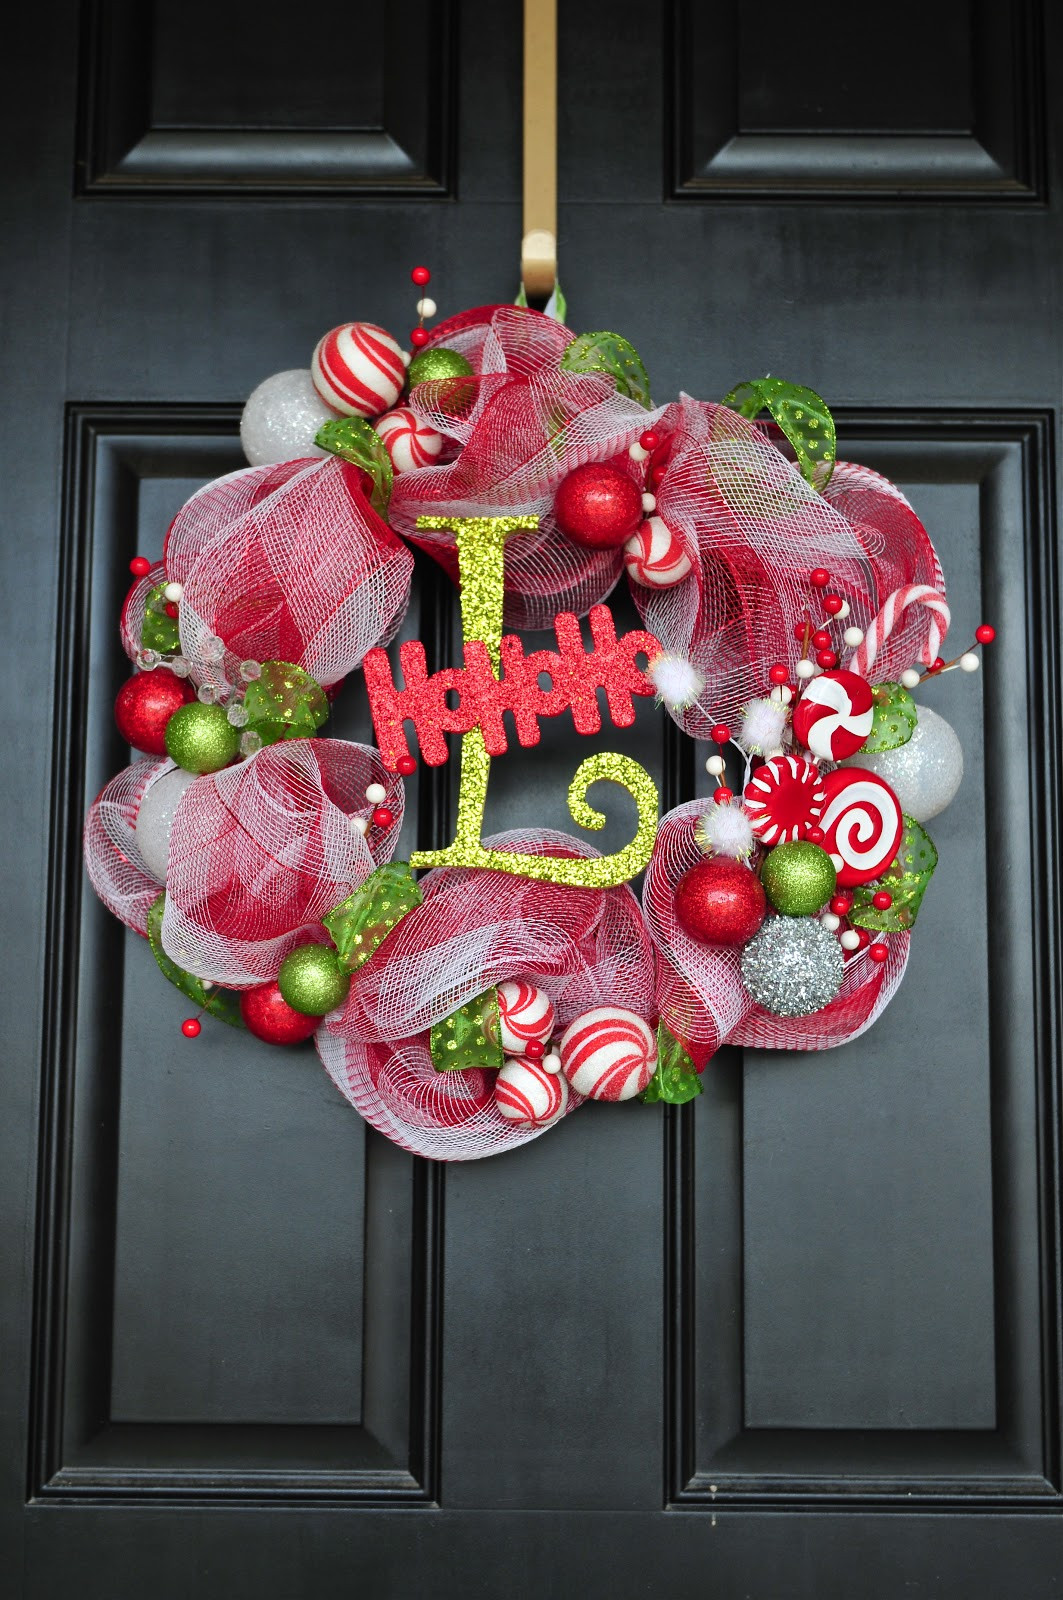 Best ideas about DIY Christmas Wreath
. Save or Pin DIY Til We Die Easy Christmas mesh wreaths Now.